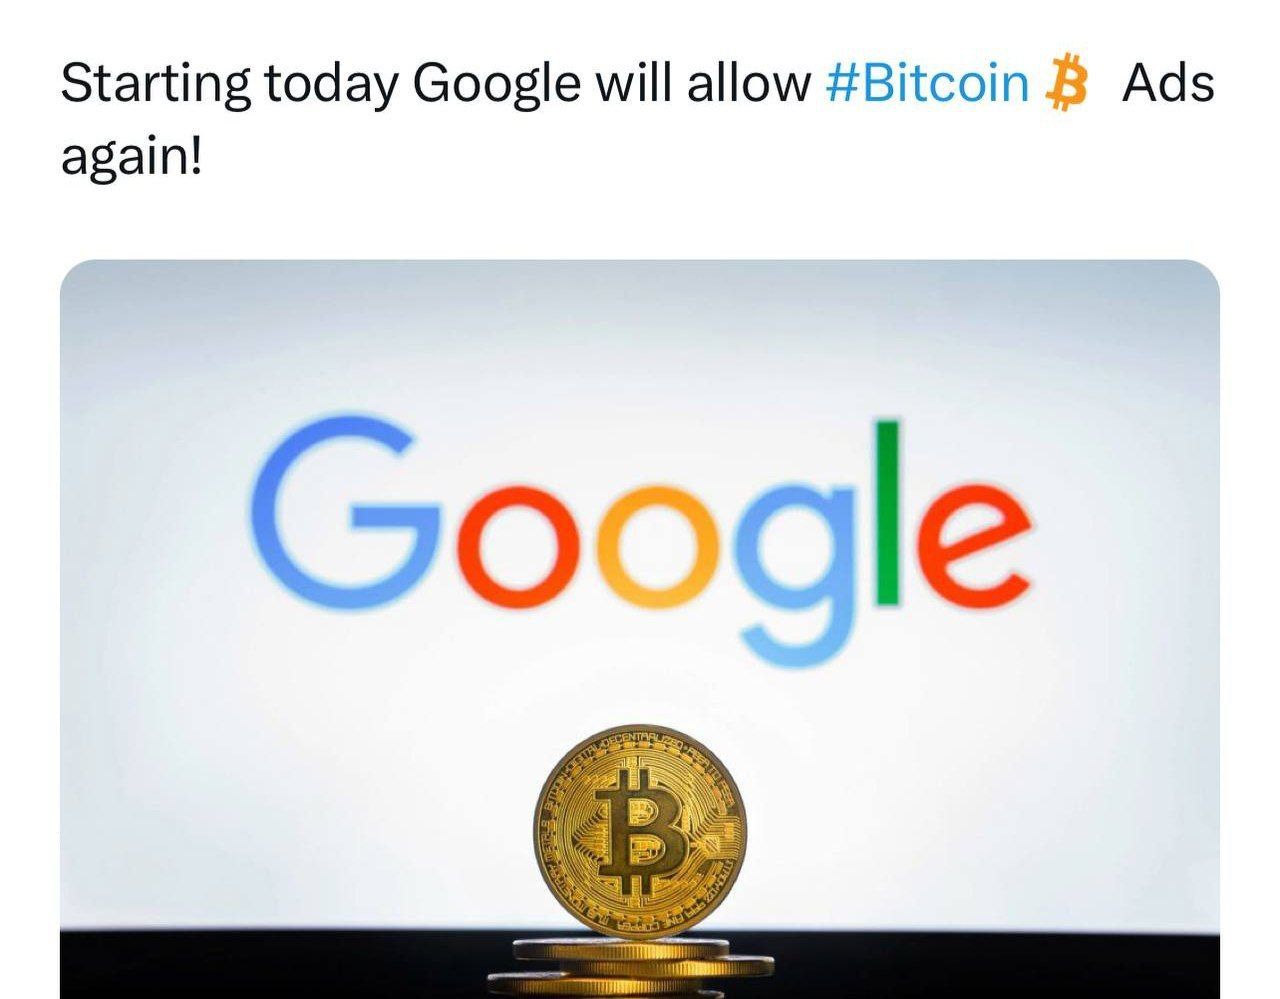 Starting today Google will allow #Bitcoin Ads
again!
Google
Join Pin
CENTAR
B
104022
7